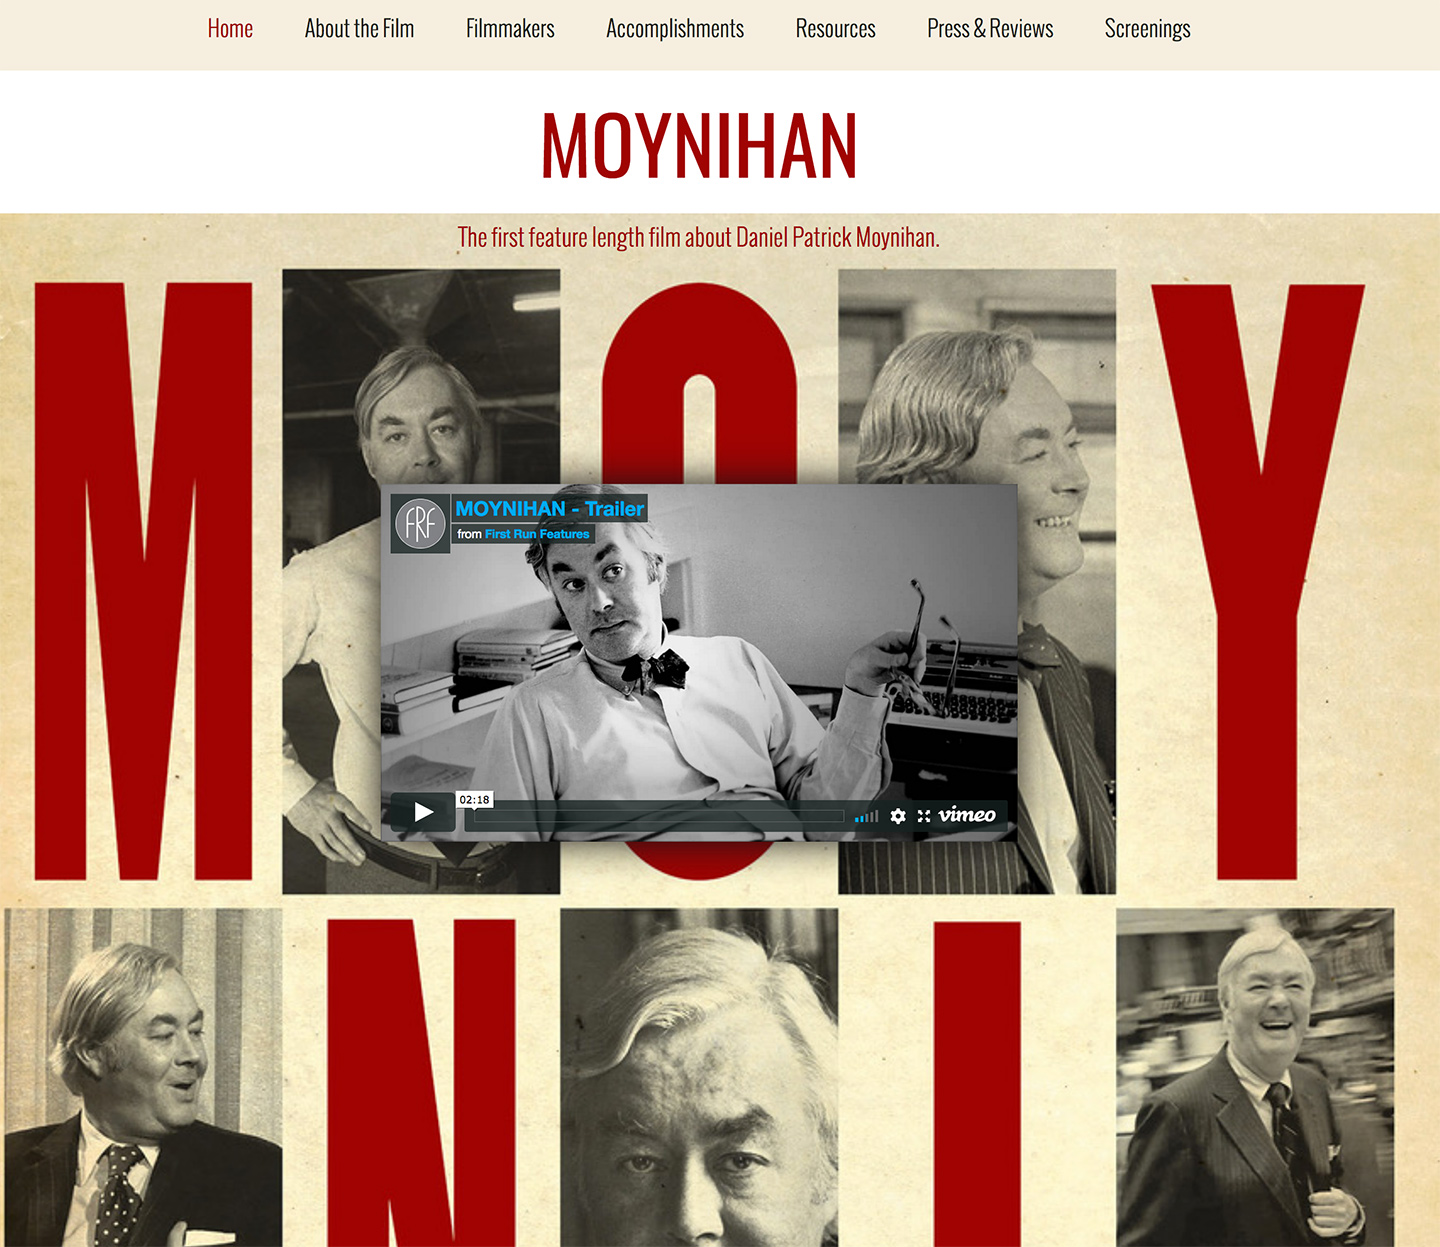 The Daniel Patrick Moynihan Film Project: Daniel Patrick Moynihan Film Home